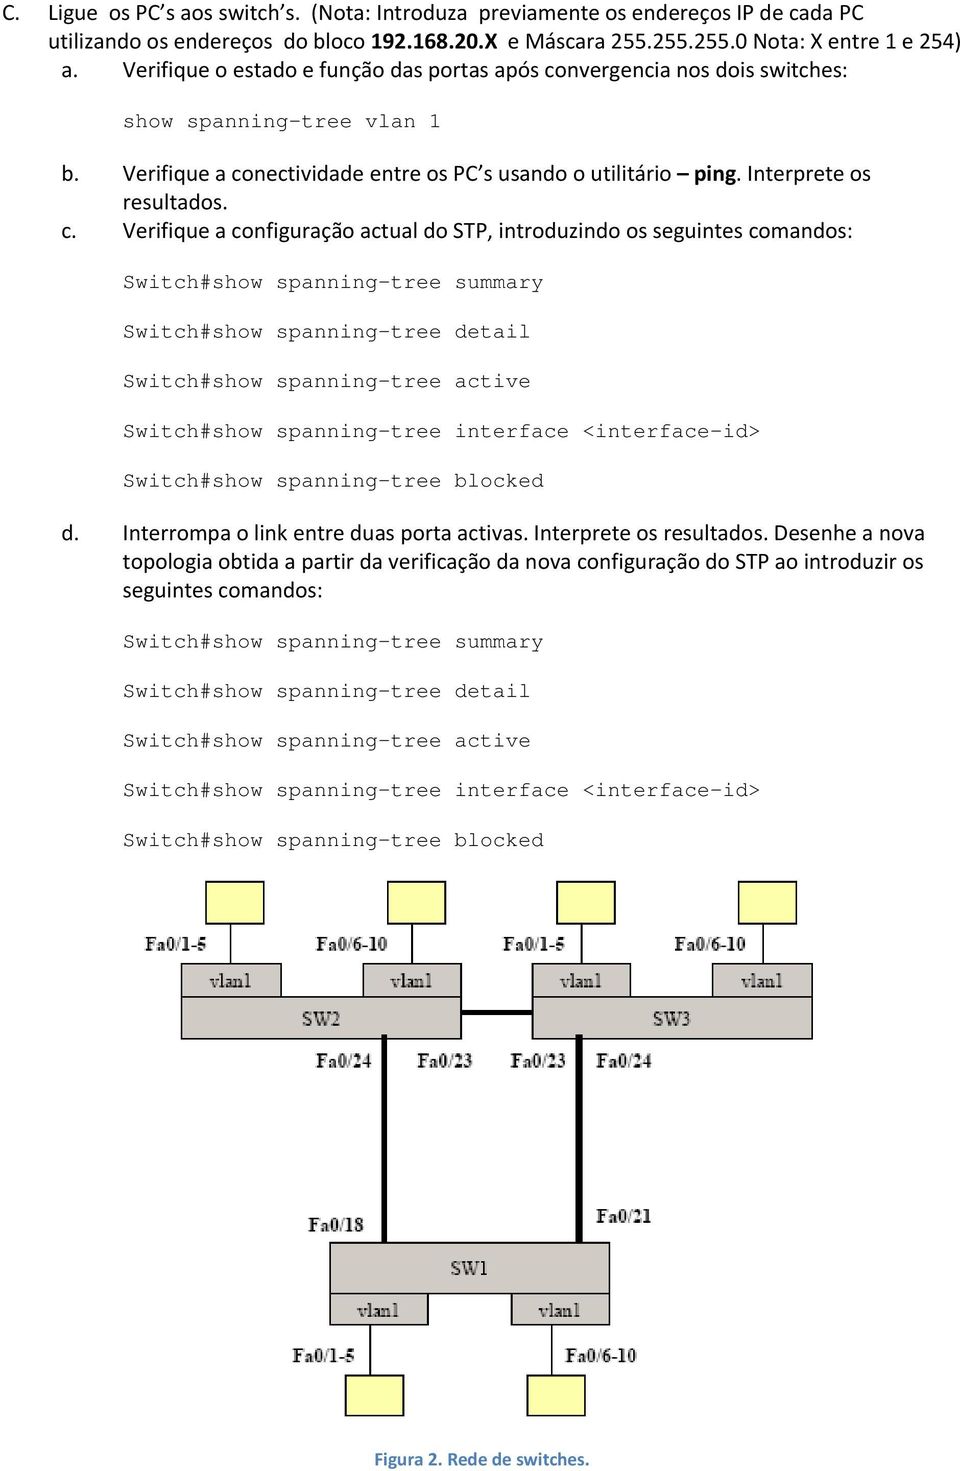 nvergencia nos dois switches: show spanning-tree vlan 1 b. Verifique a co